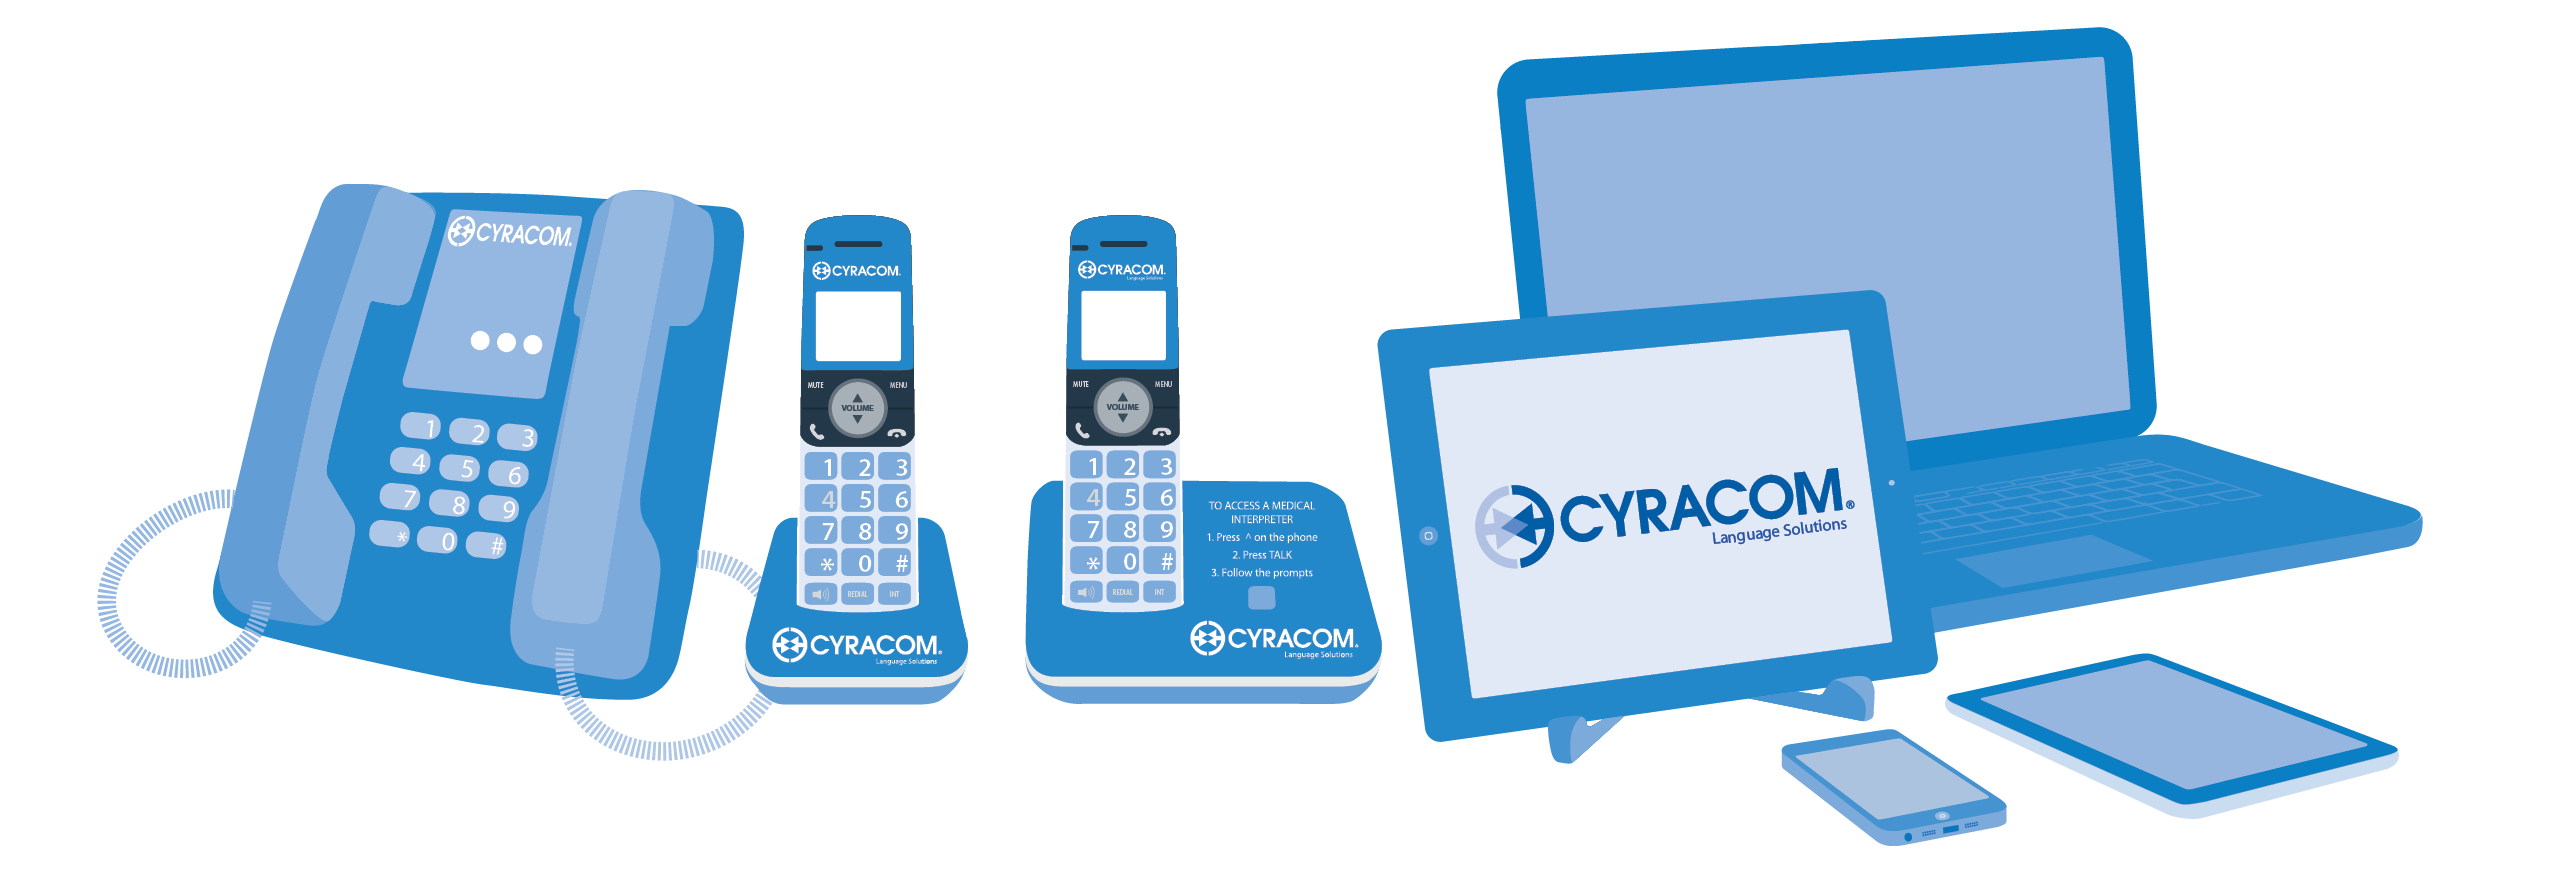 CyraCom-devices